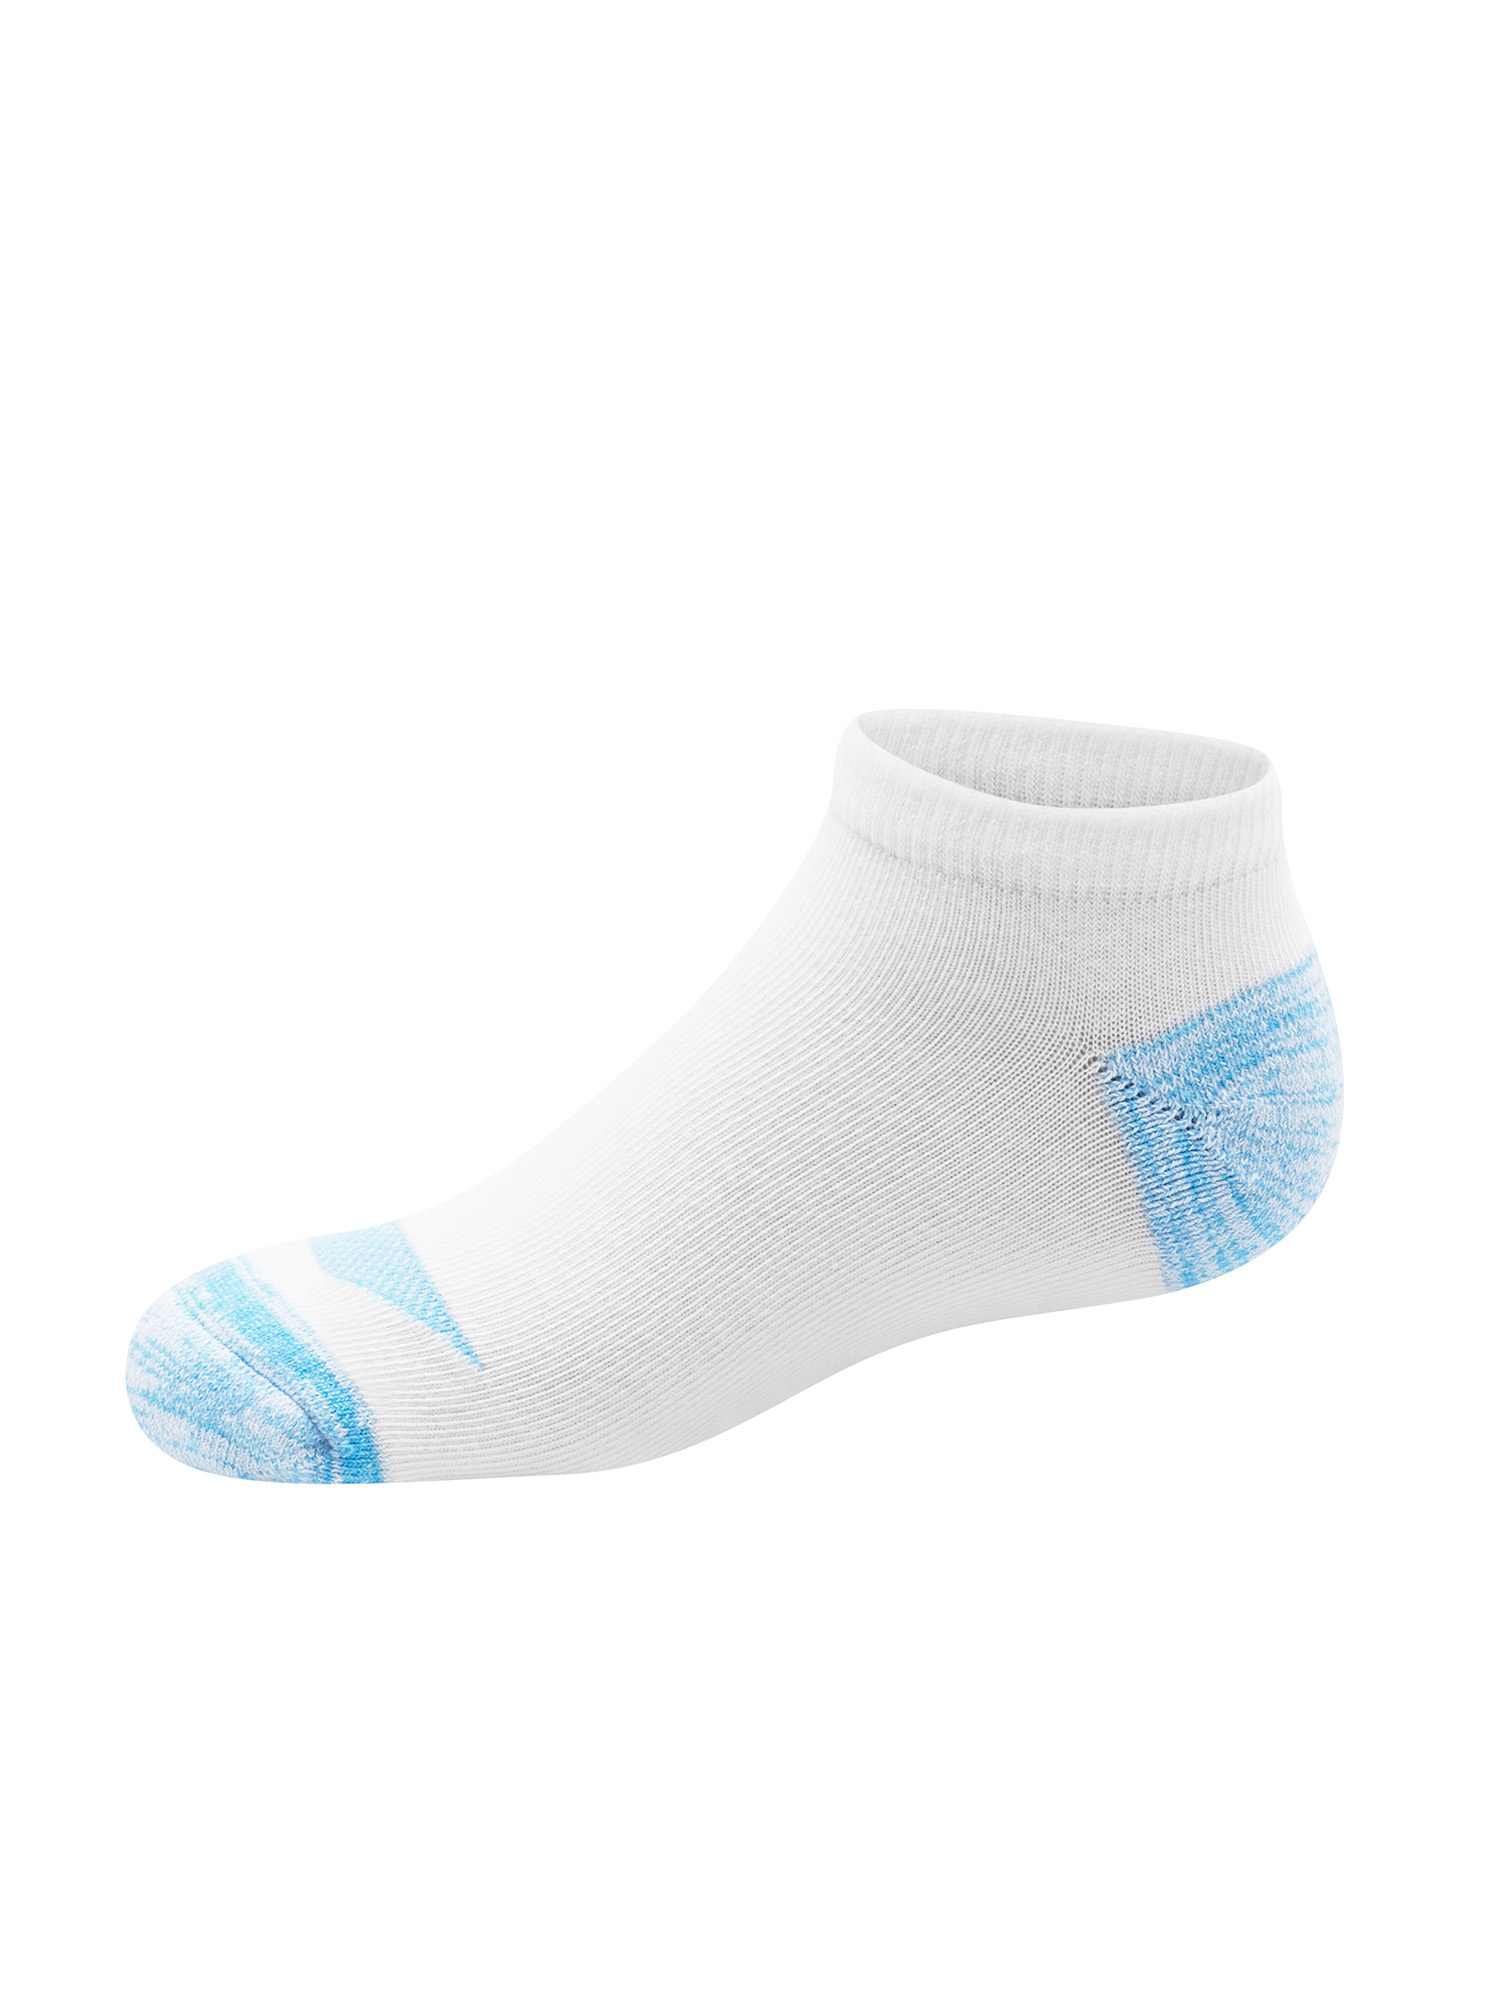 Hanes Girls' Socks, 12 Pack Cool Comfort No Show Socks, Size S-L - image 4 of 5